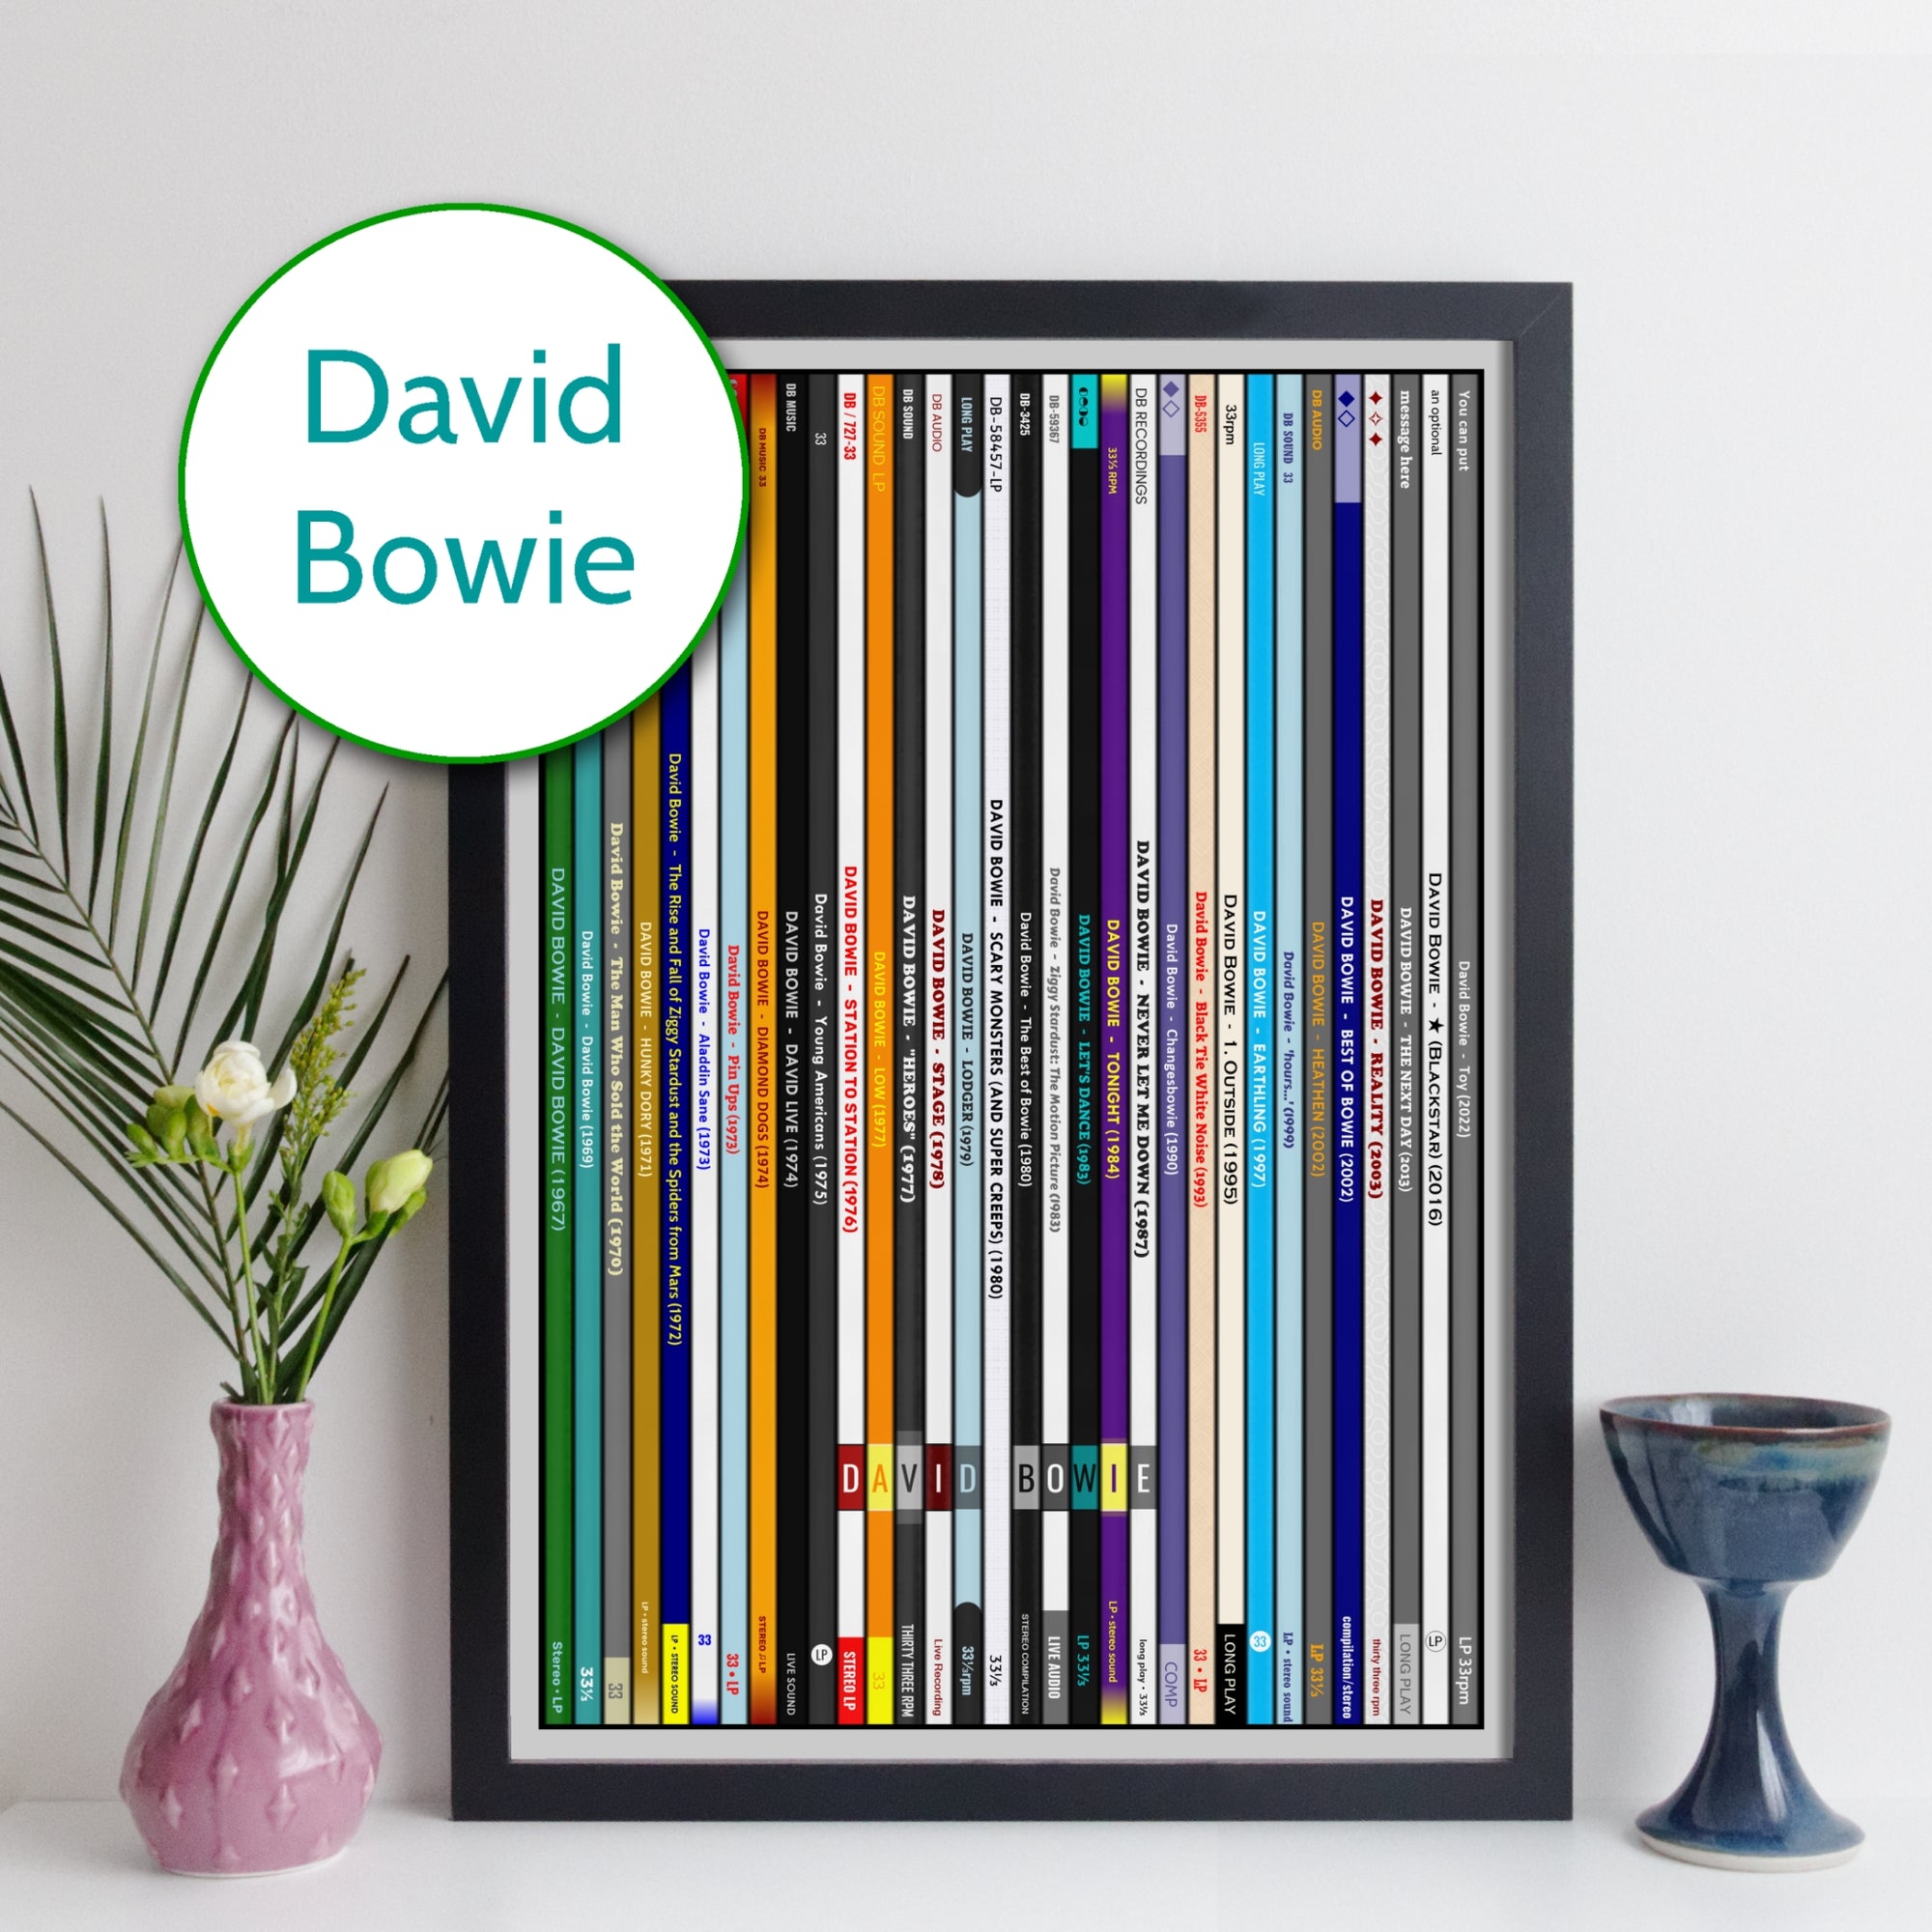 David Bowie Discography Print